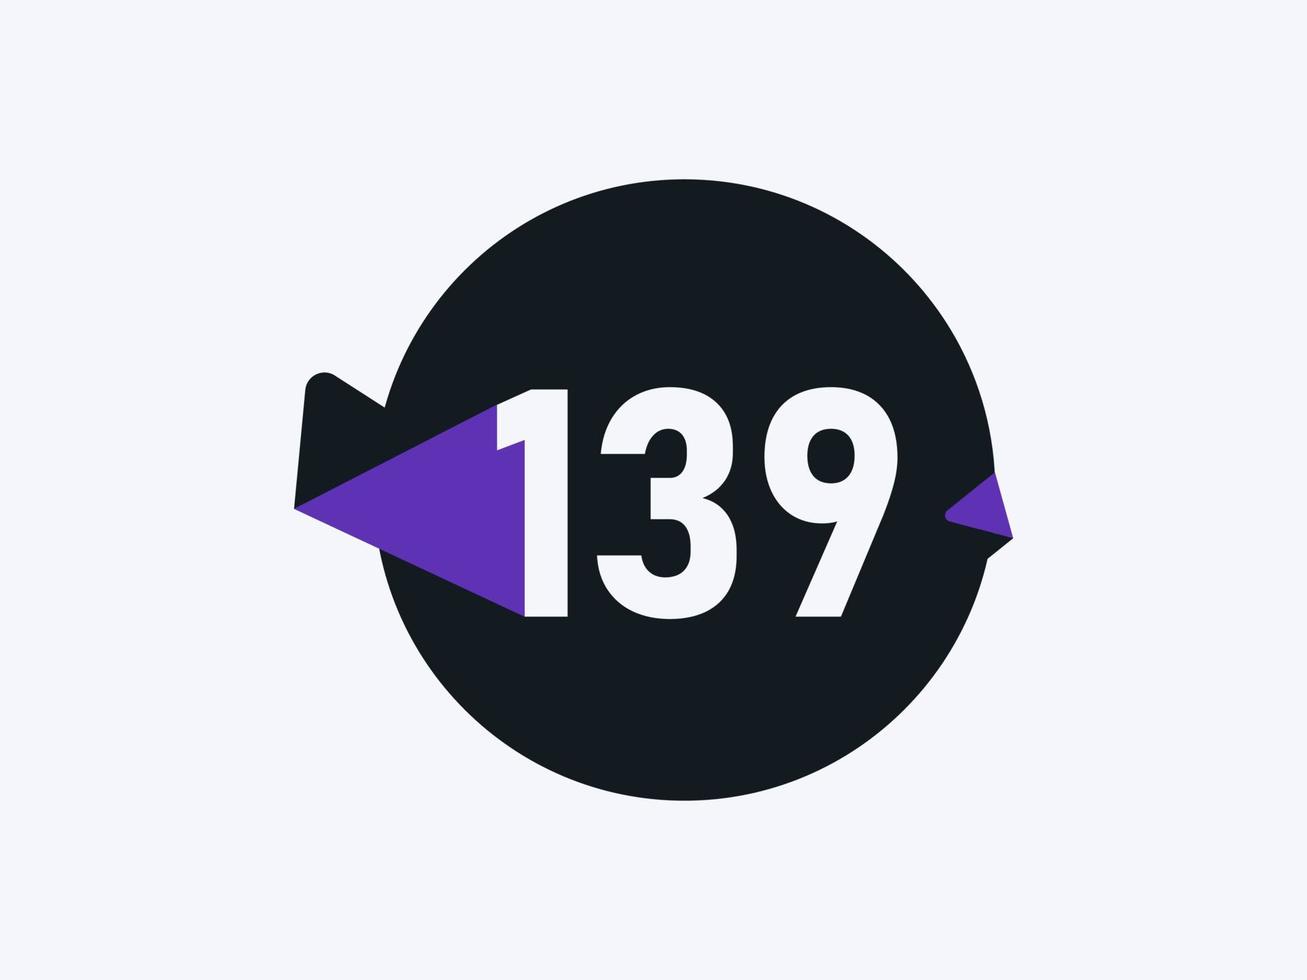 139 Number logo icon design vector image. Number logo icon design vector image